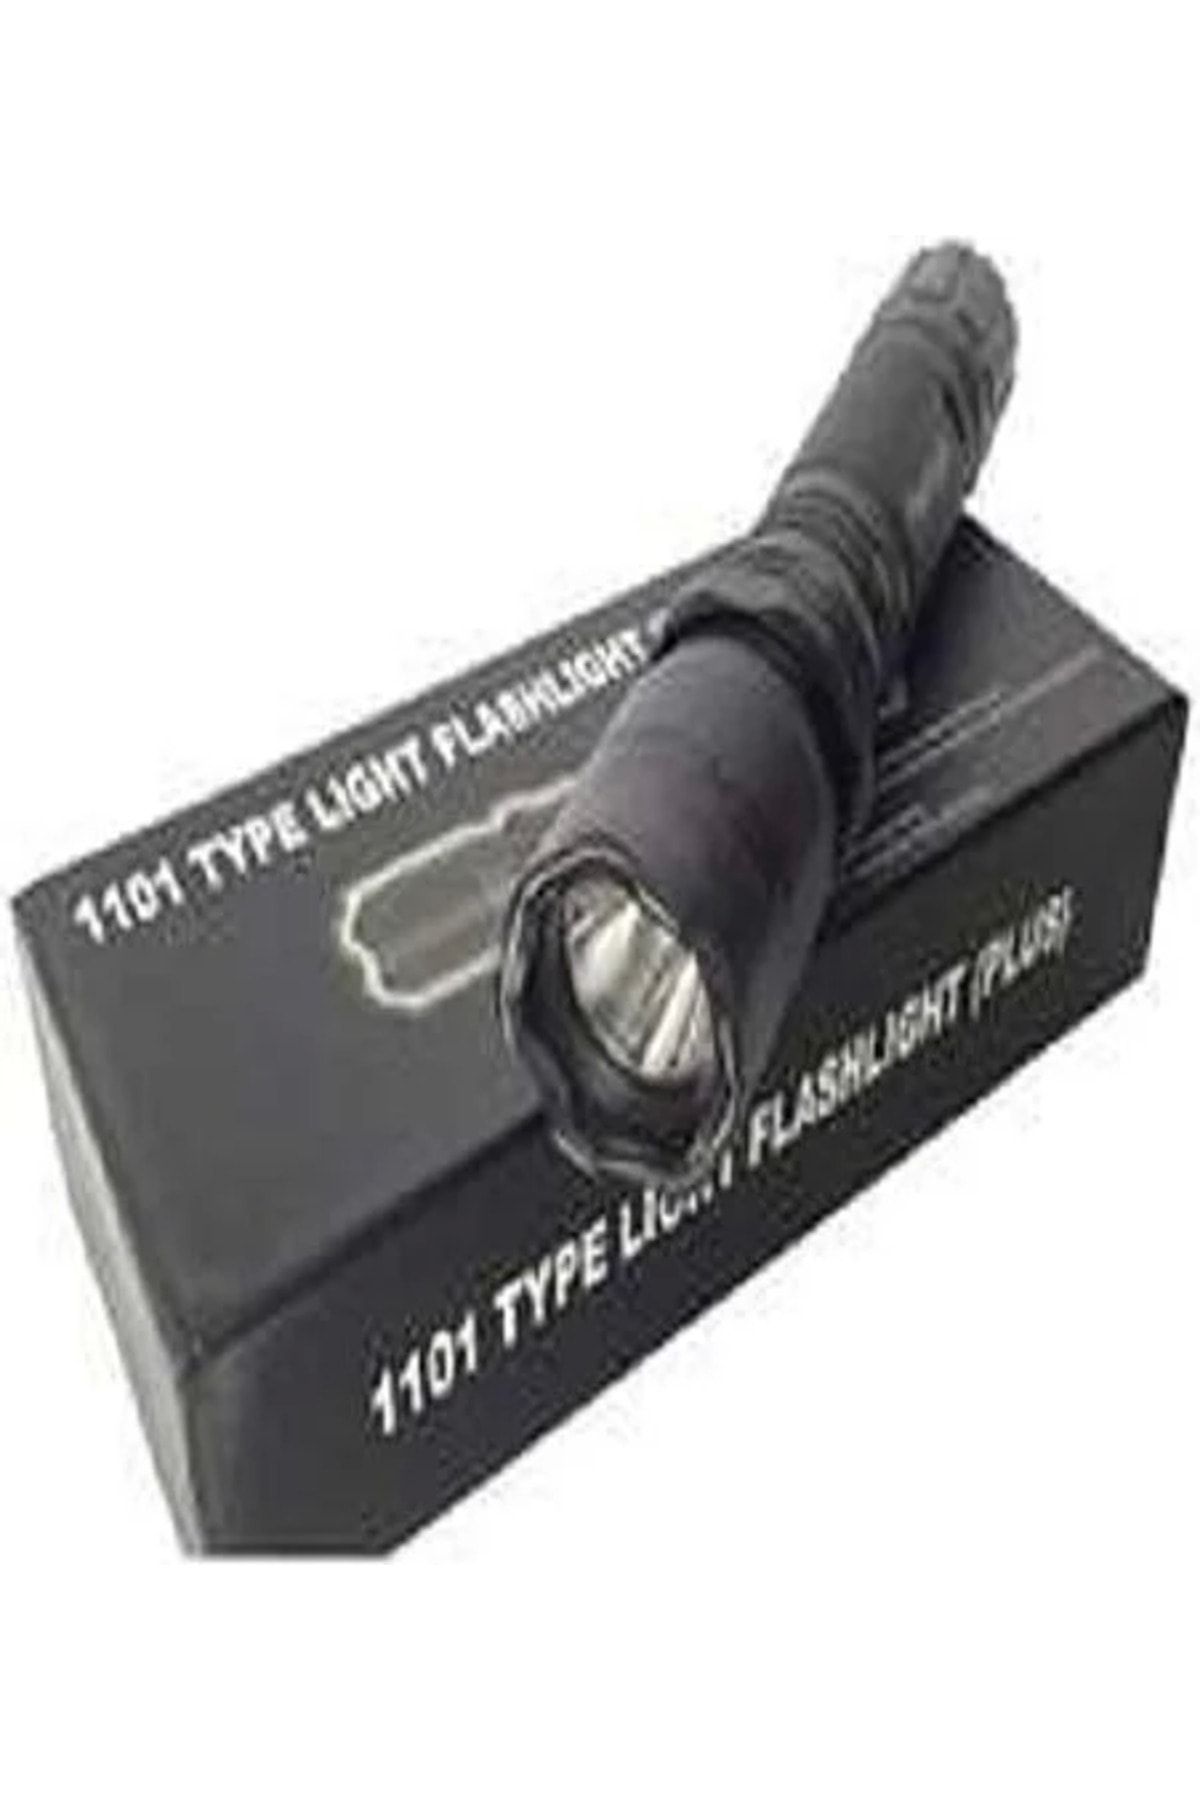 Akıncı Askeri Malzeme 1101 Type Lıght Flash Lıght El Feneri Elektıro ŞOK